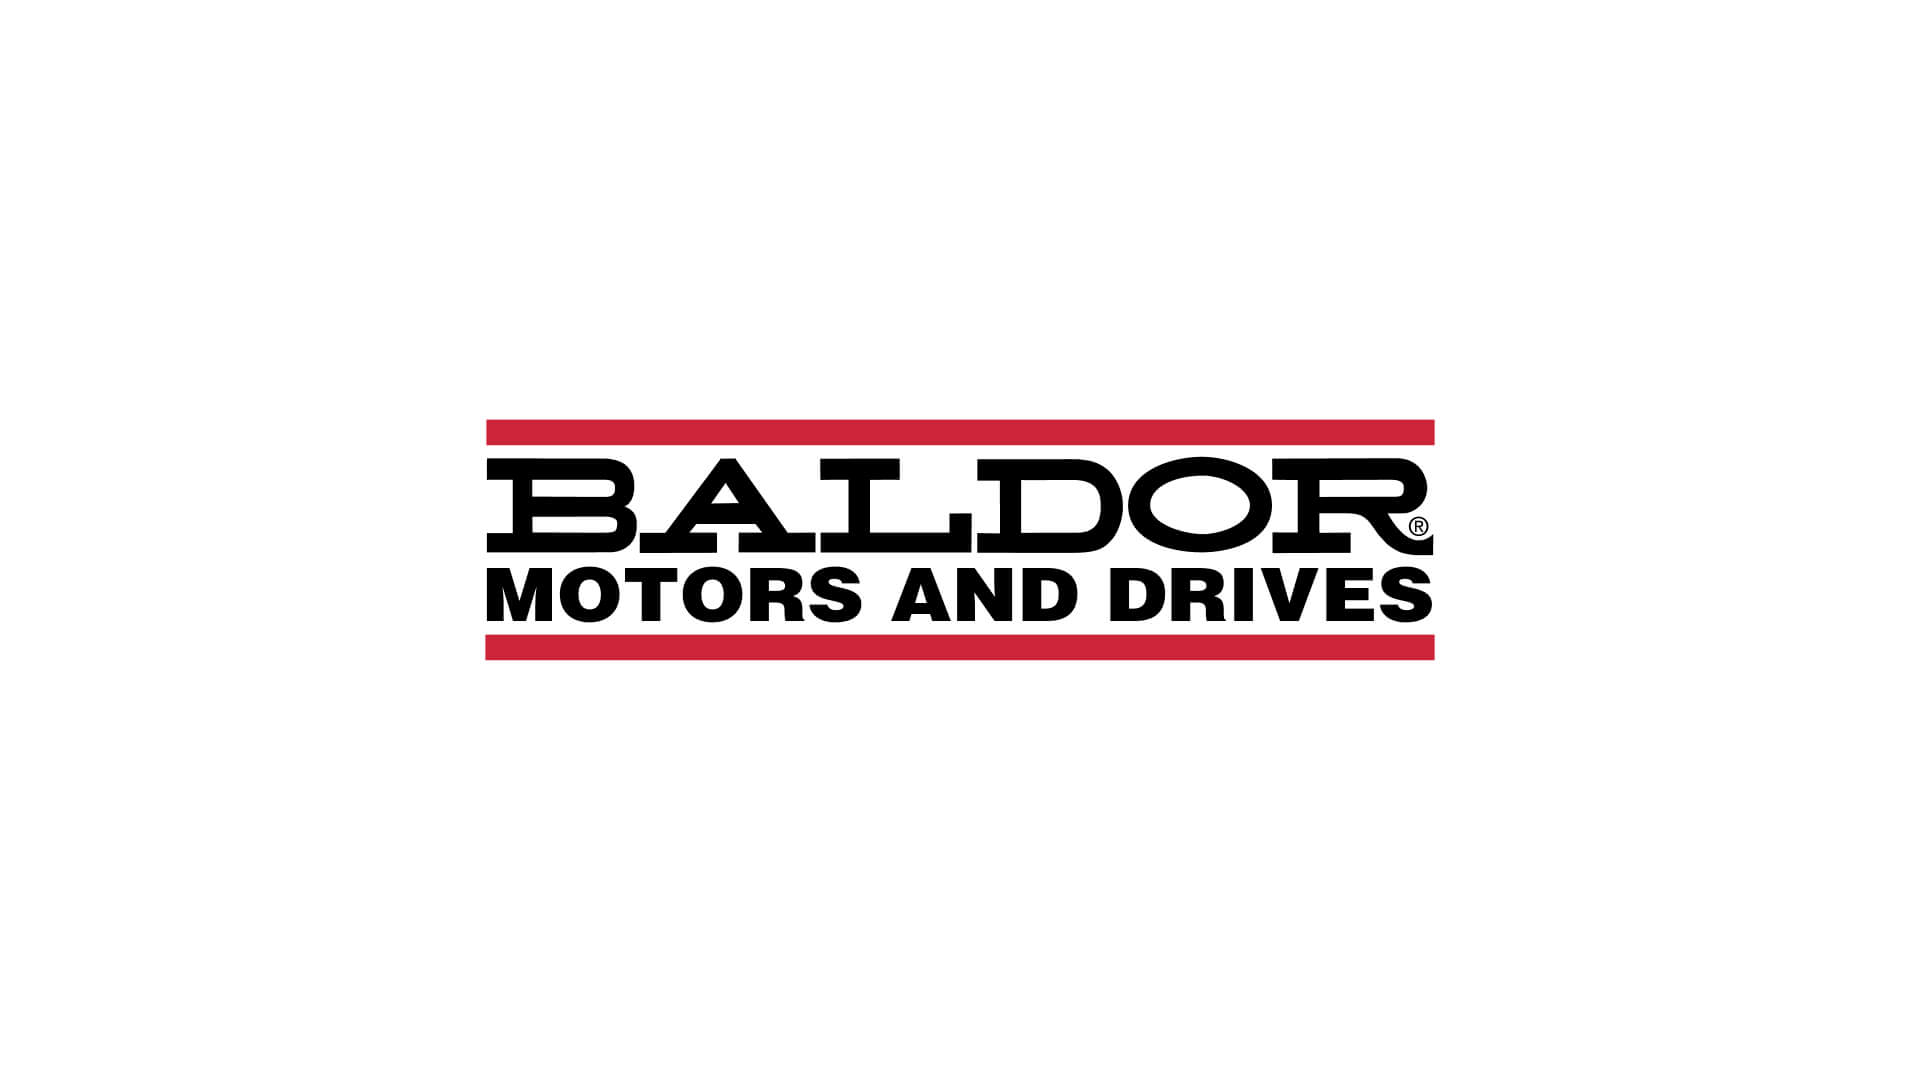 Baldor Motors & Drives logo in color